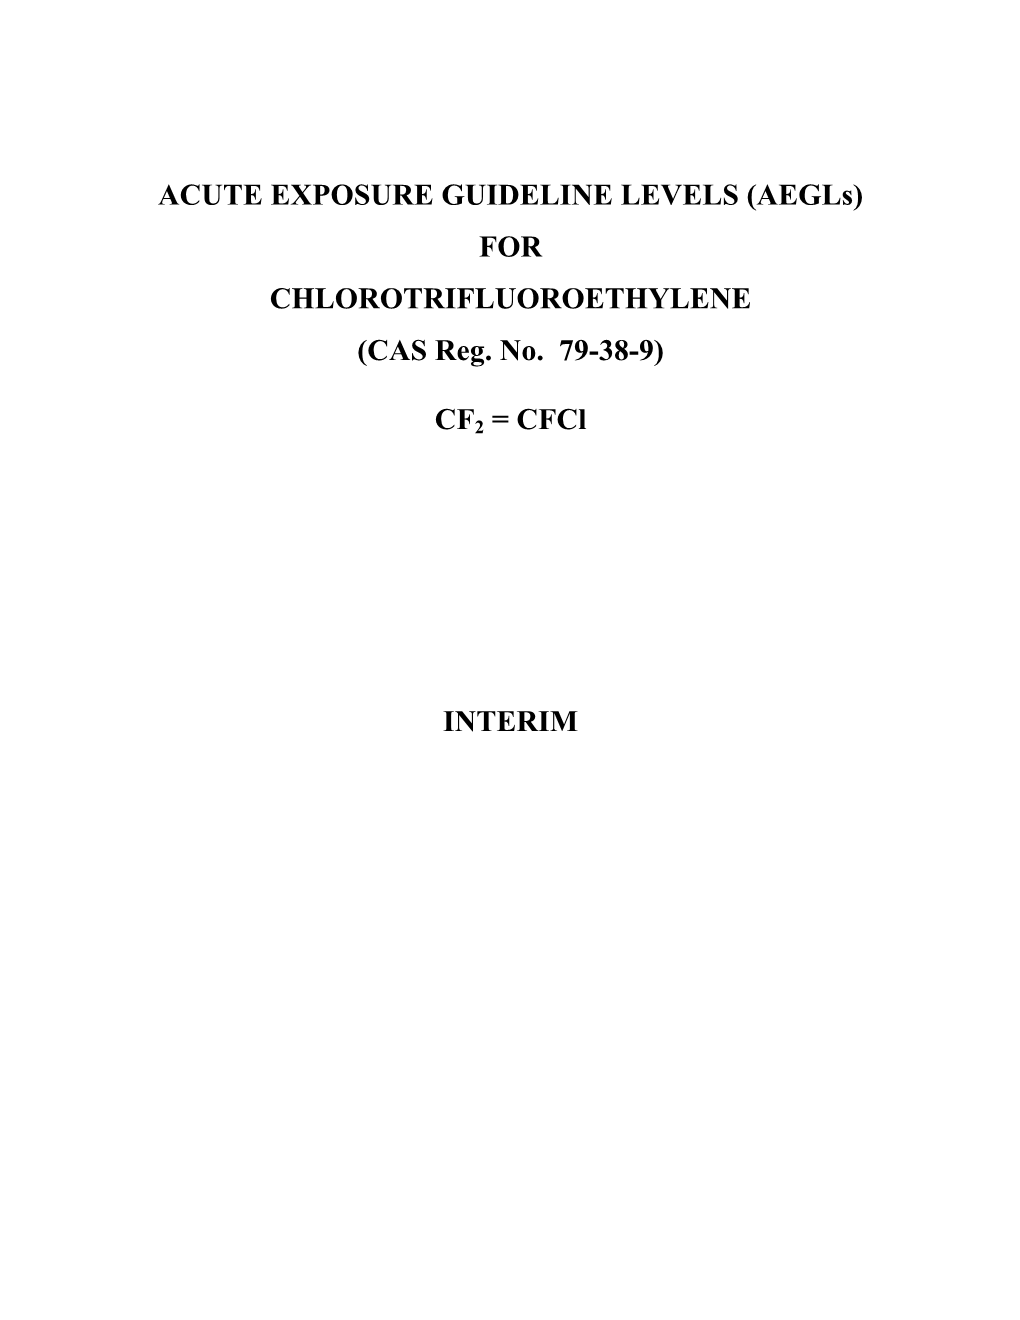 Chlorotrifluoroethylene Interim AEGL Document